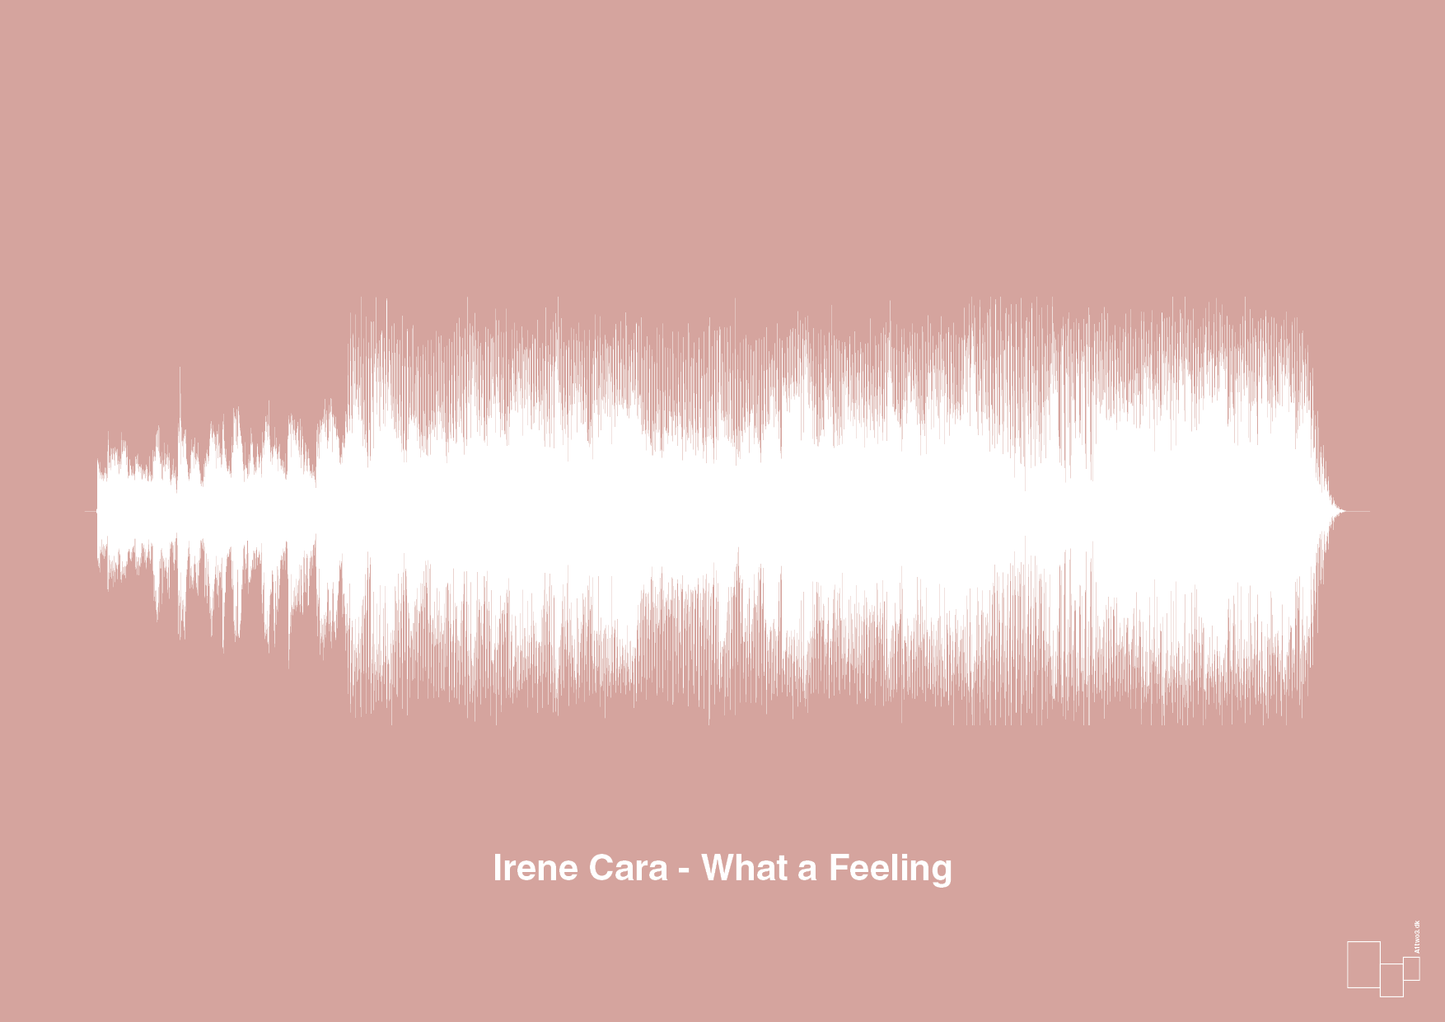 irene cara - what a feeling - Plakat med Musik i Bubble Shell